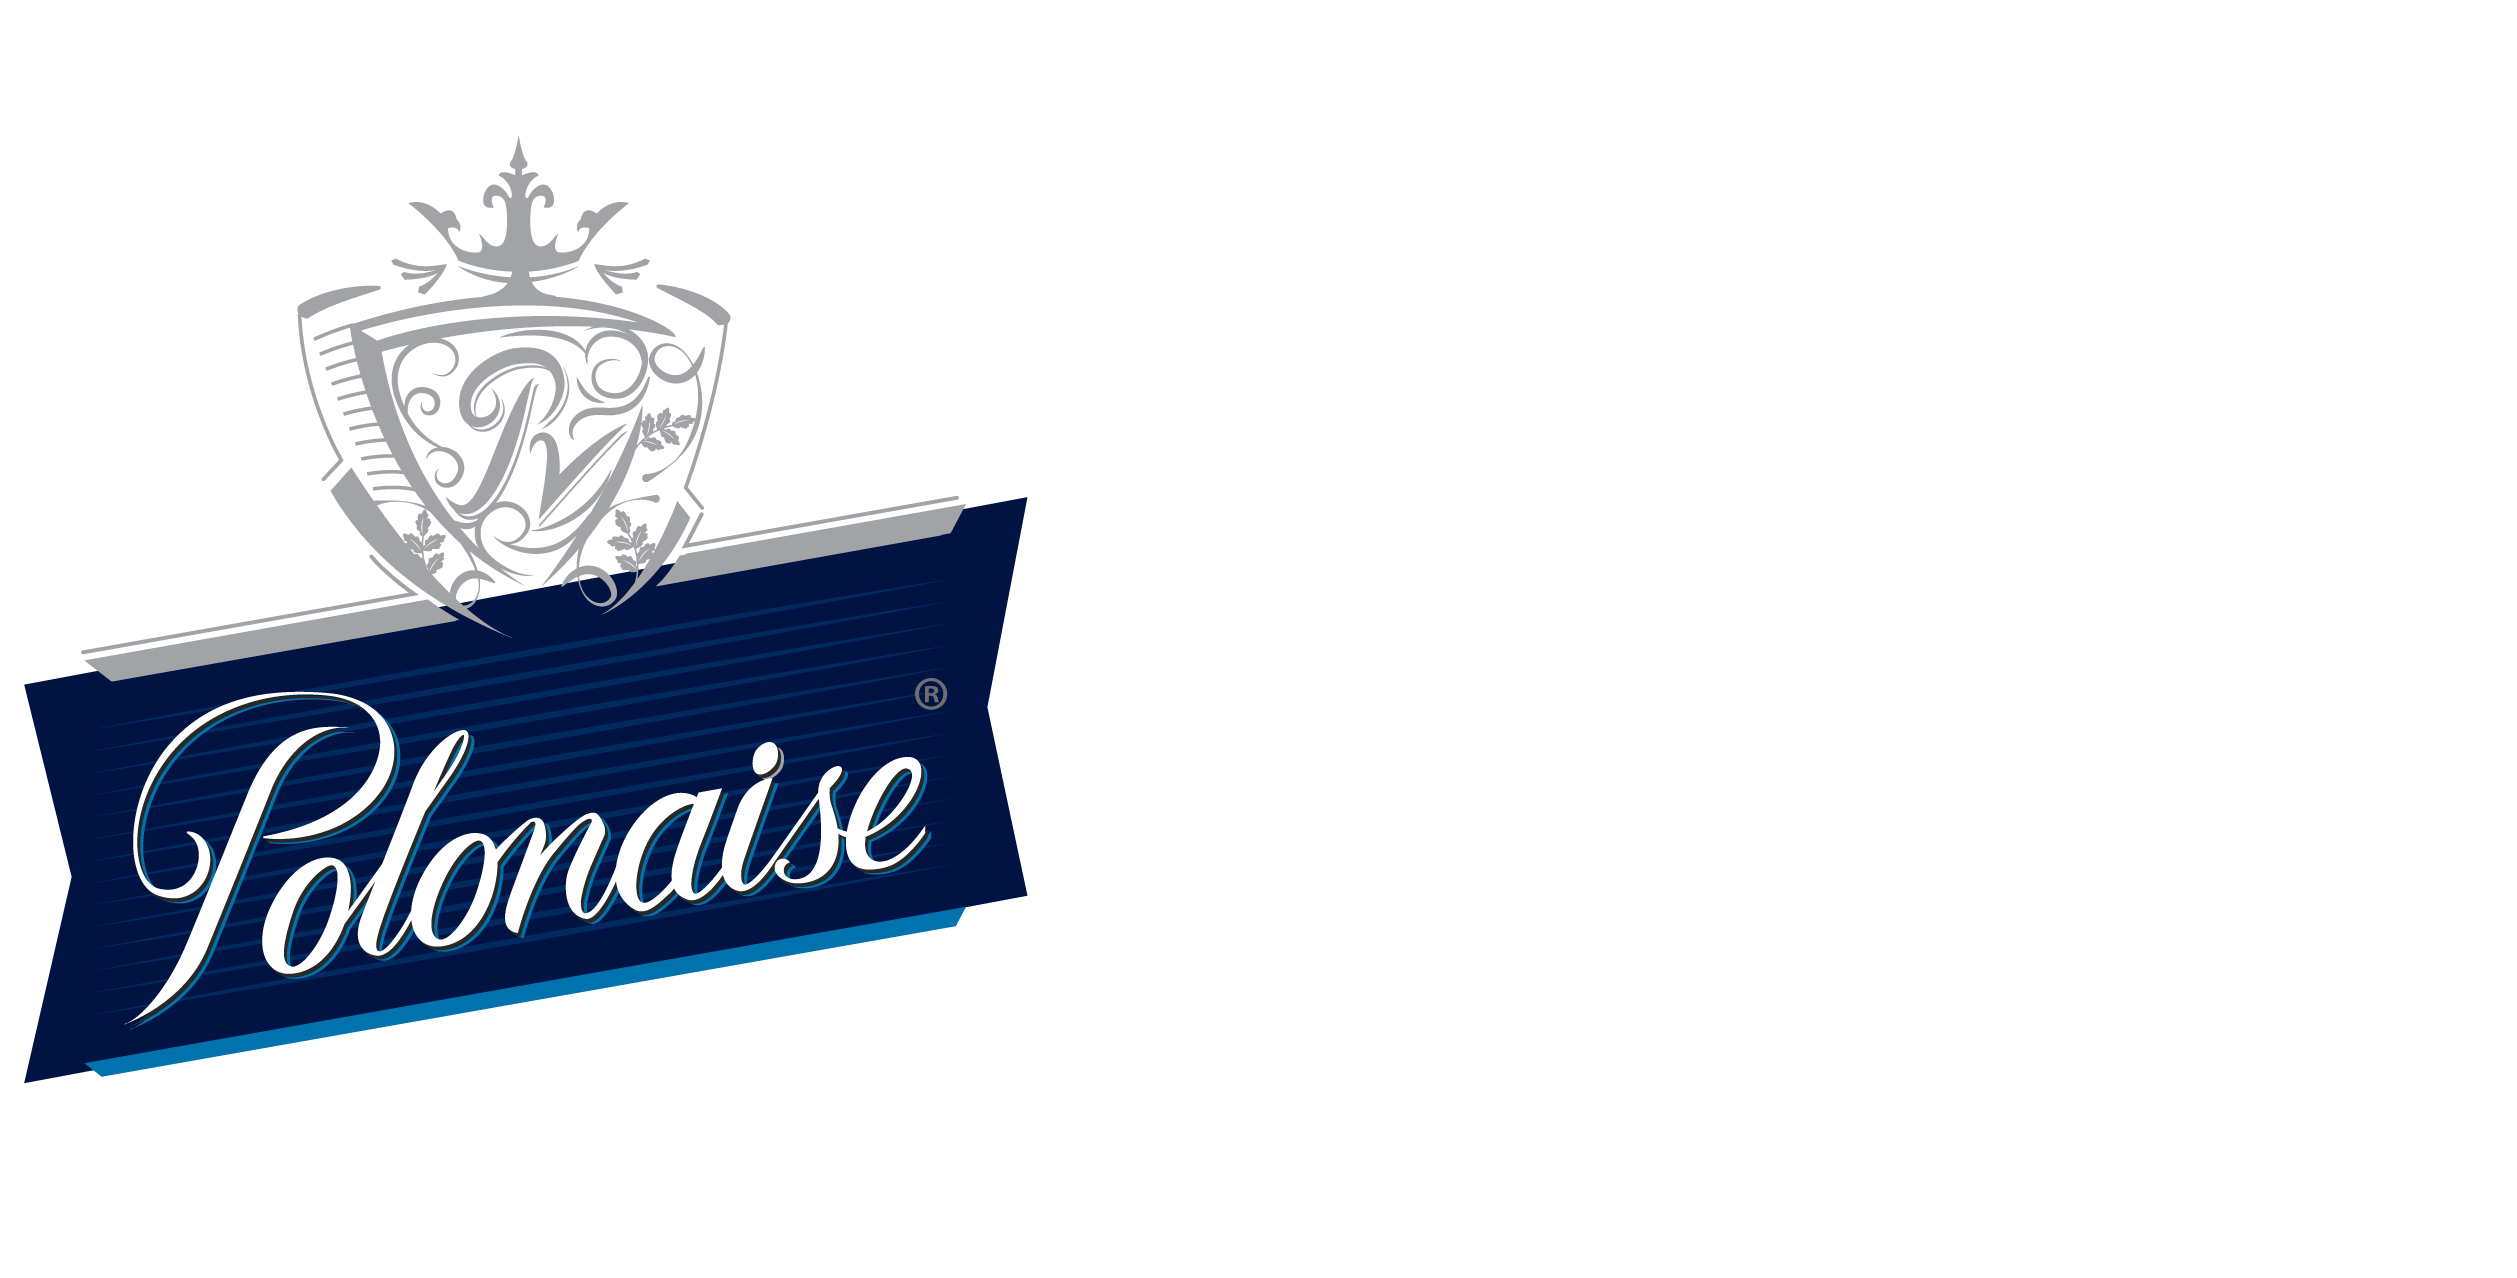 Home of the Polonaise Liquor Family - Polonaise Vodka